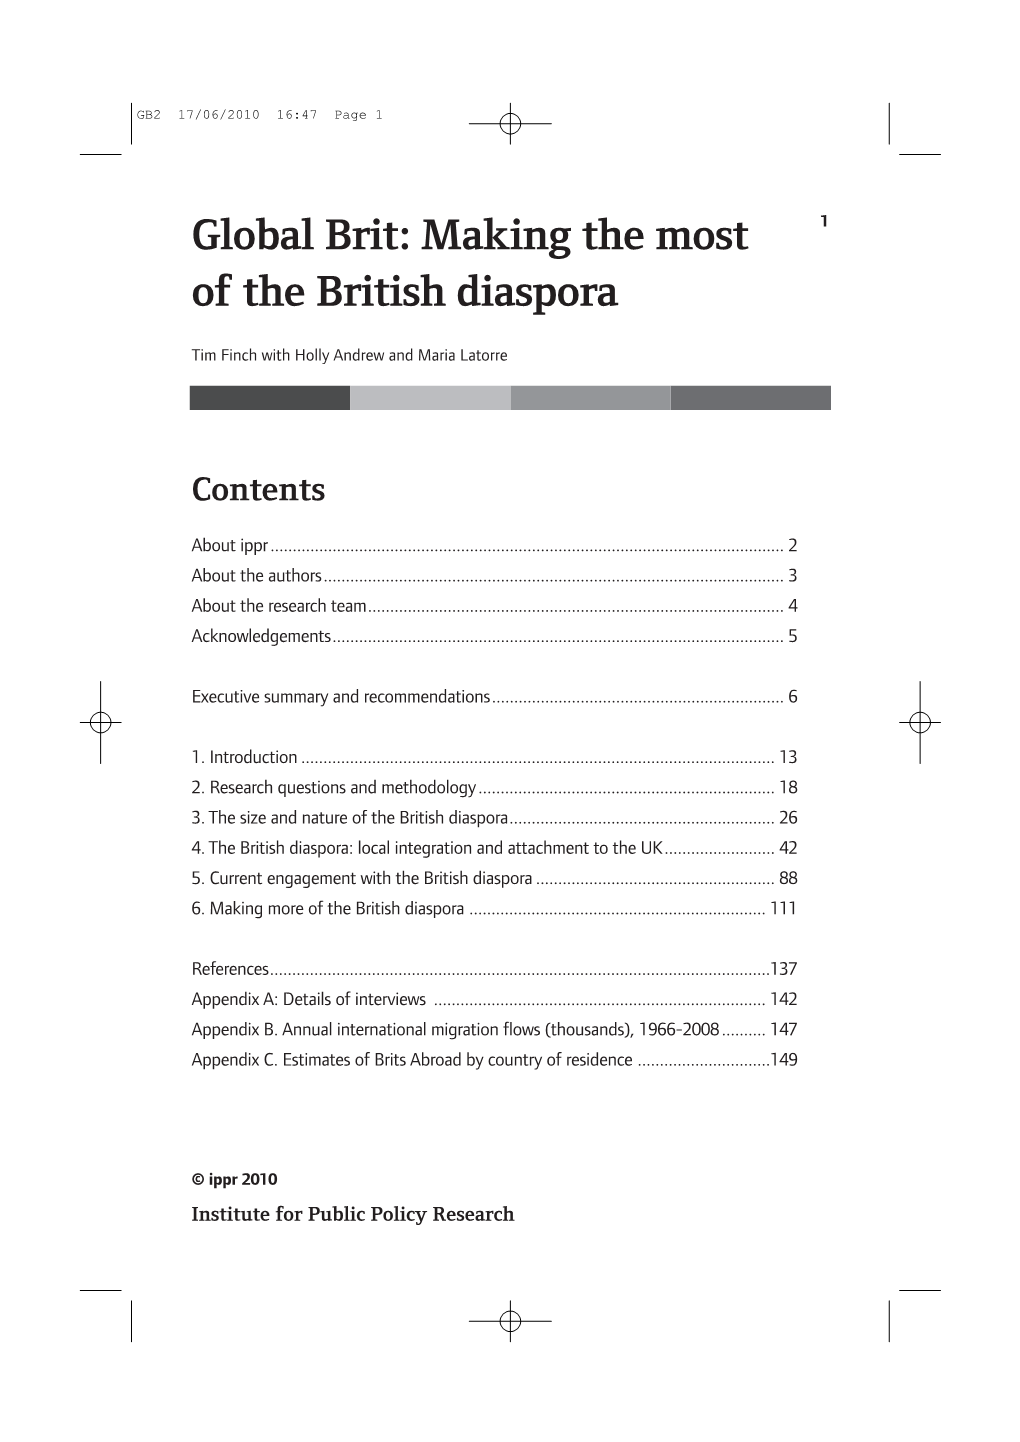 Global Brit: Making the Most of the British Diaspora